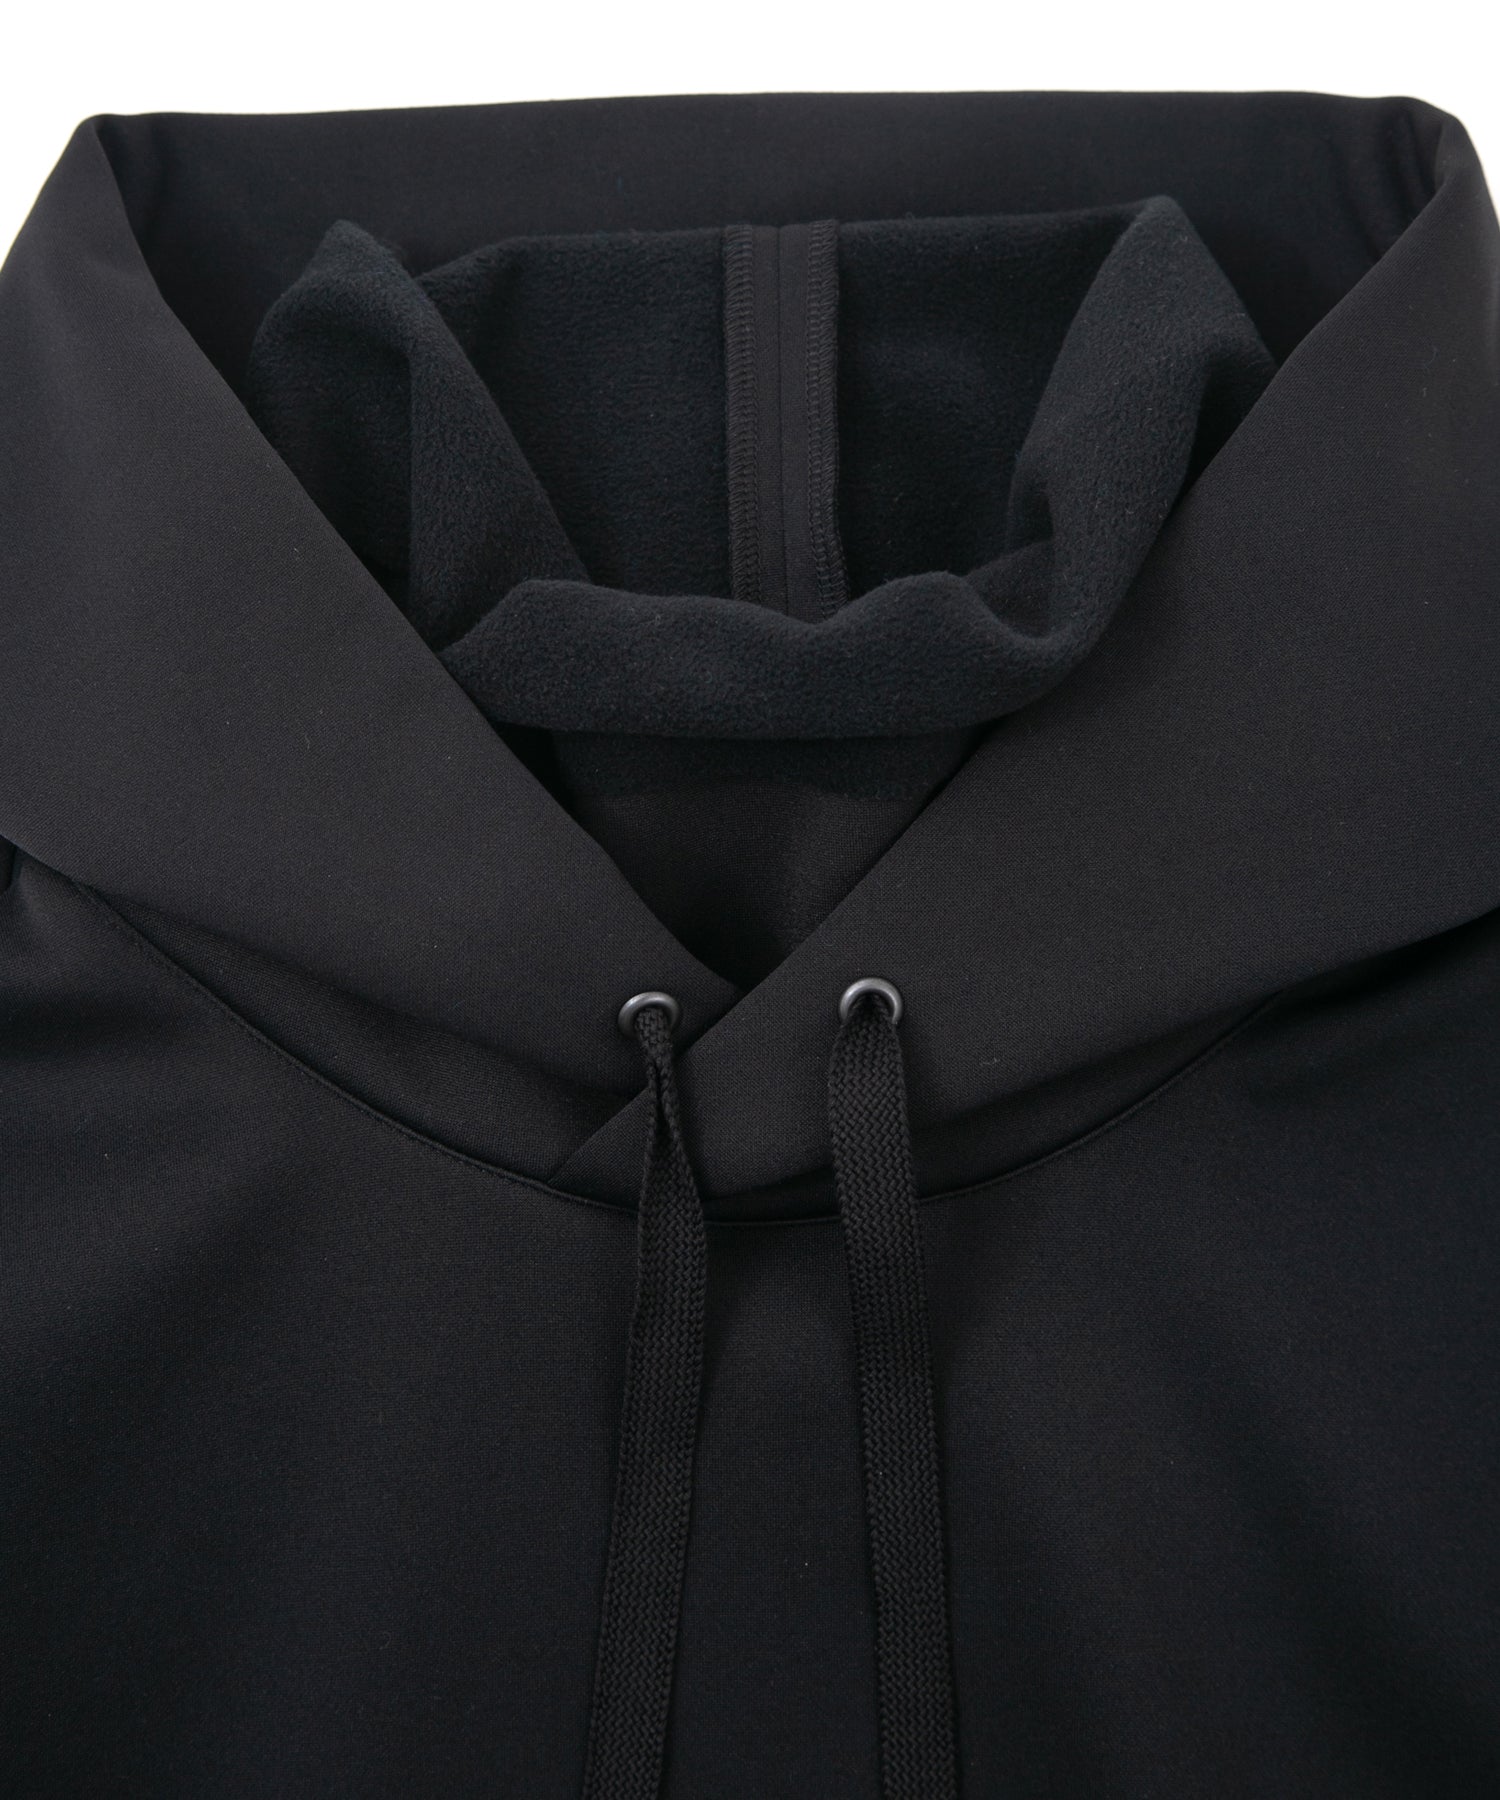 Load image into Gallery viewer, Fleece Lined CORDURA Jersey Hight Neck Hoodie - BLACK